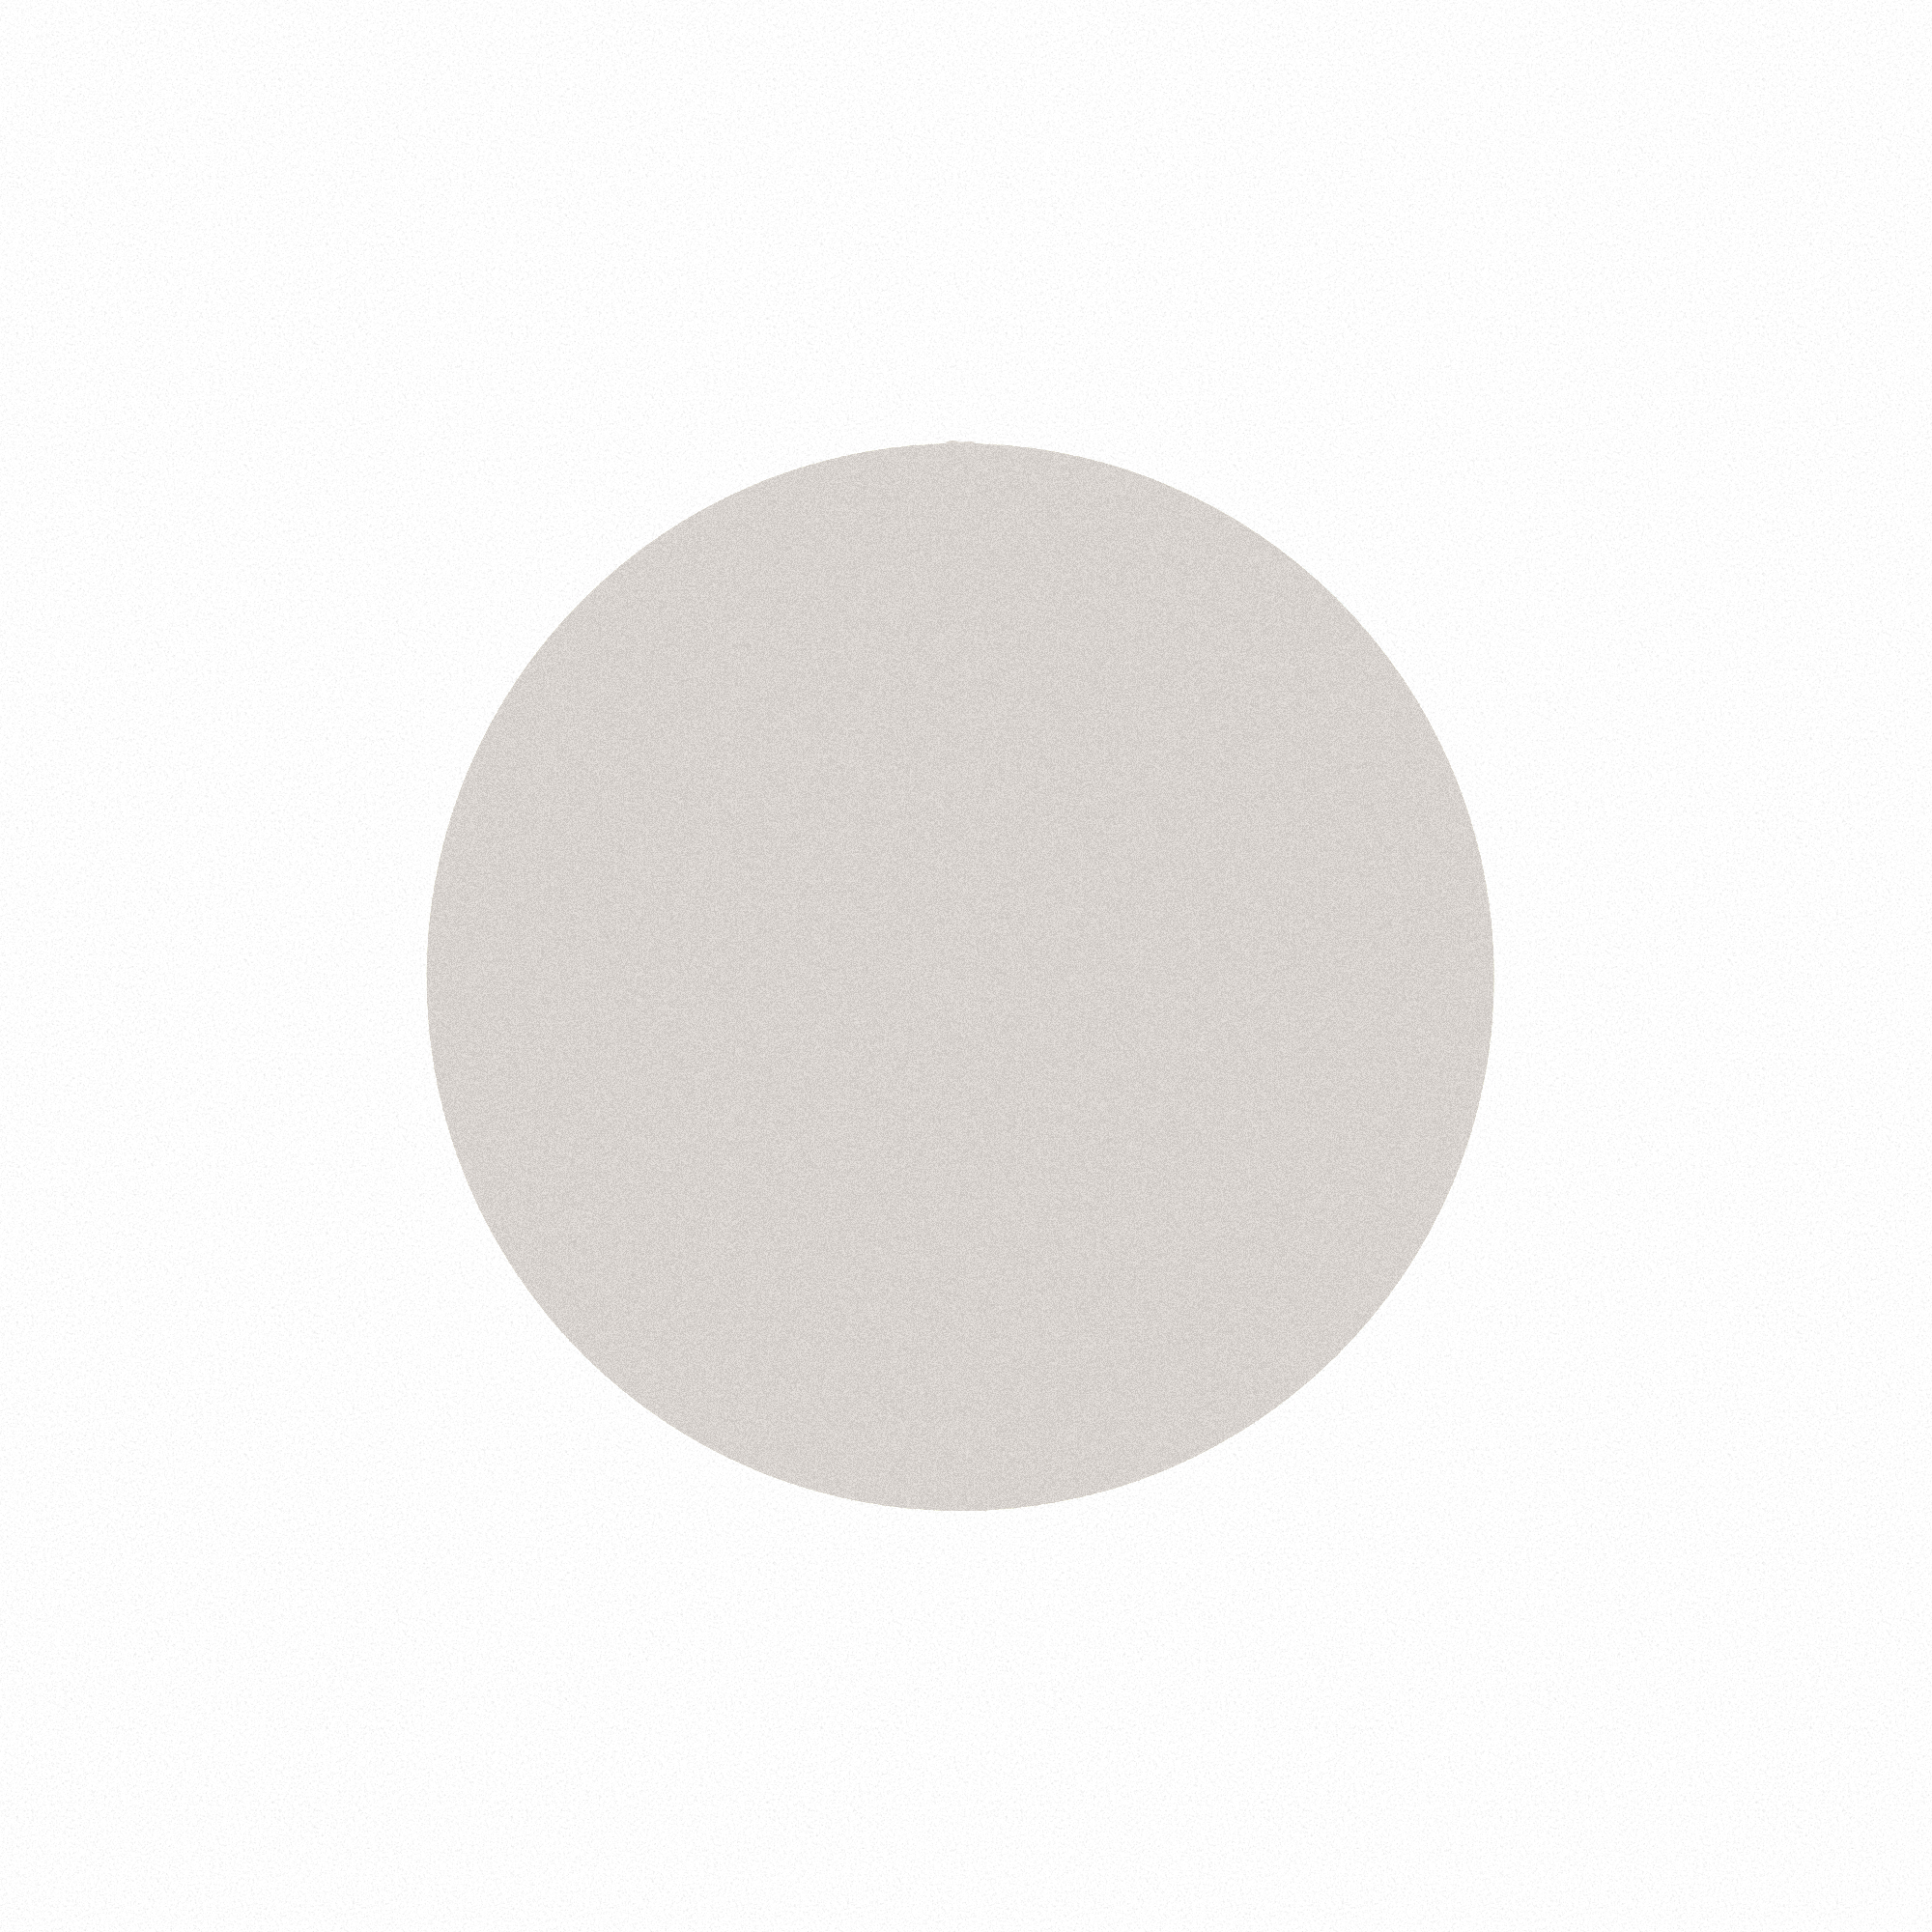 Tsukineko VersaMagic Dew Drop Ink Pad – Cloud White